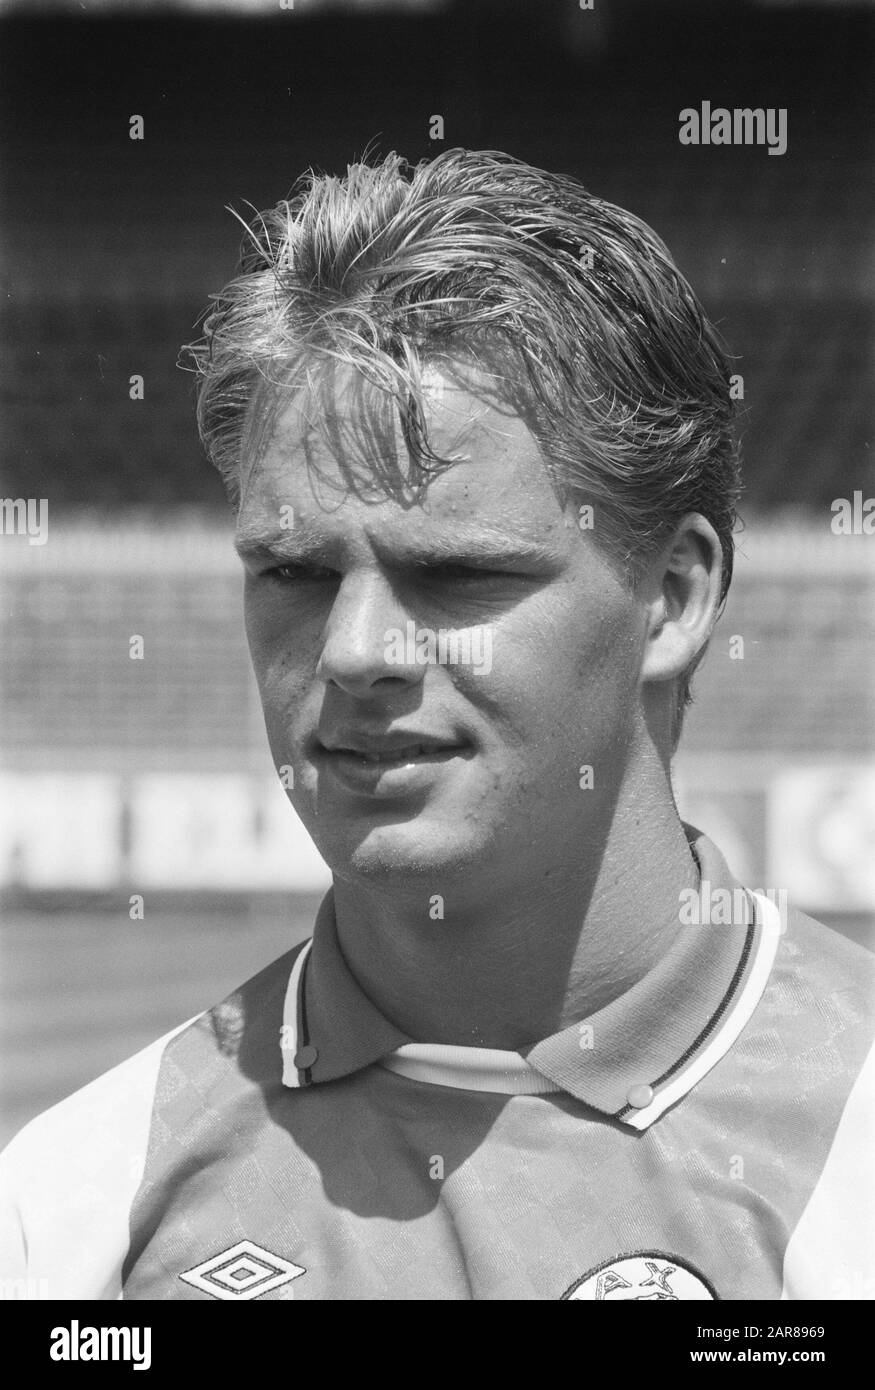 Press day Ajax  Ronald de Boer Annotation: nr. 9, 10: Frank de Boer, 11, 12: Ronald de Boer Date: July 3, 1989 Keywords: portraits, players, sport, football Personal name: Farmer, Ronald de Stock Photo